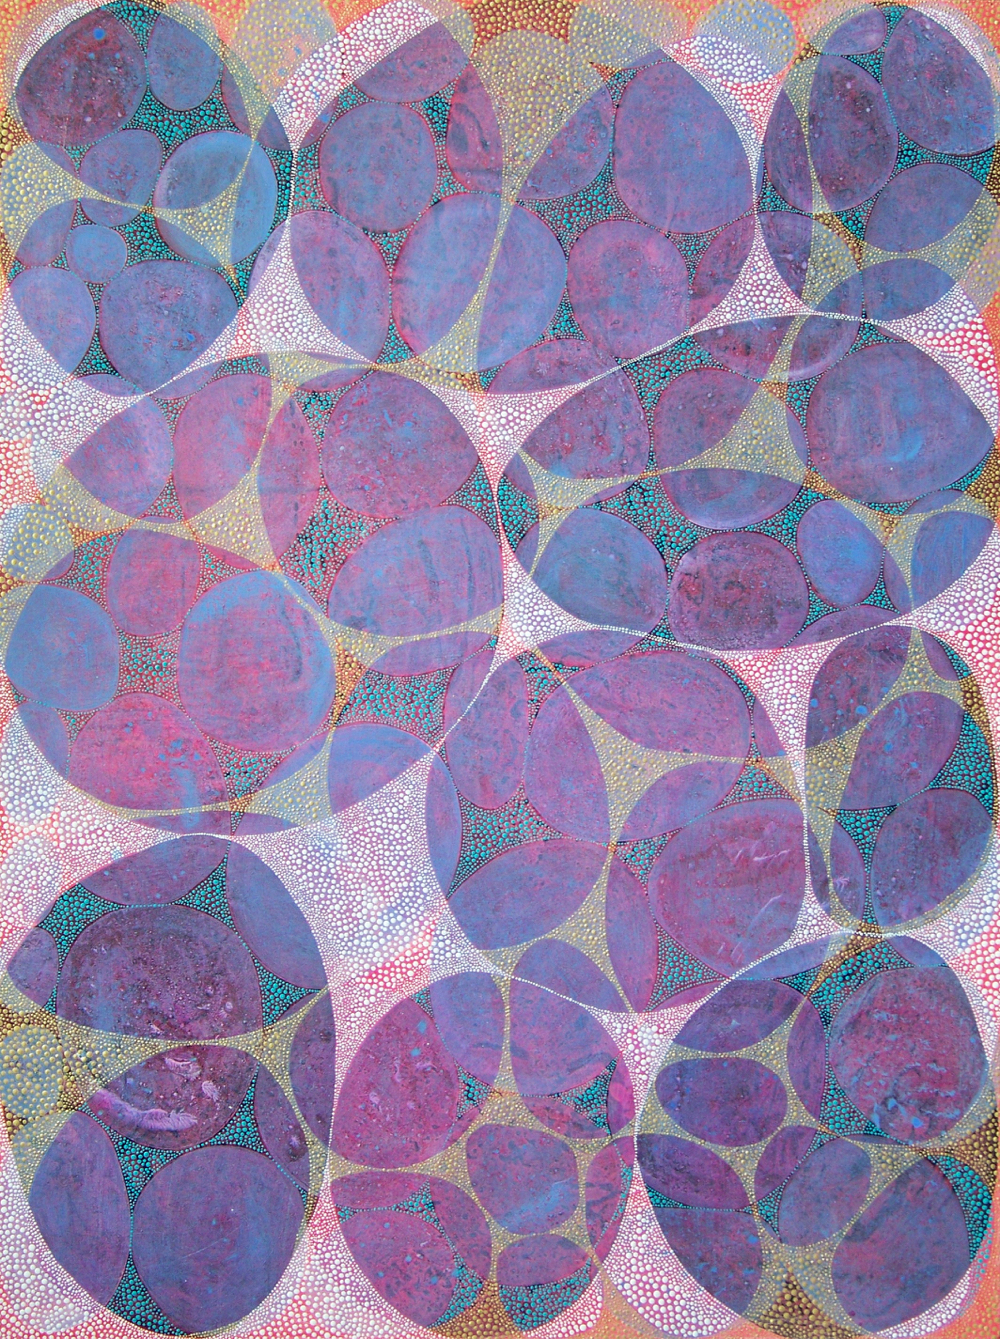  D. Driscoll,  Inner Garden 27 , acrylic on panel, 48x36 